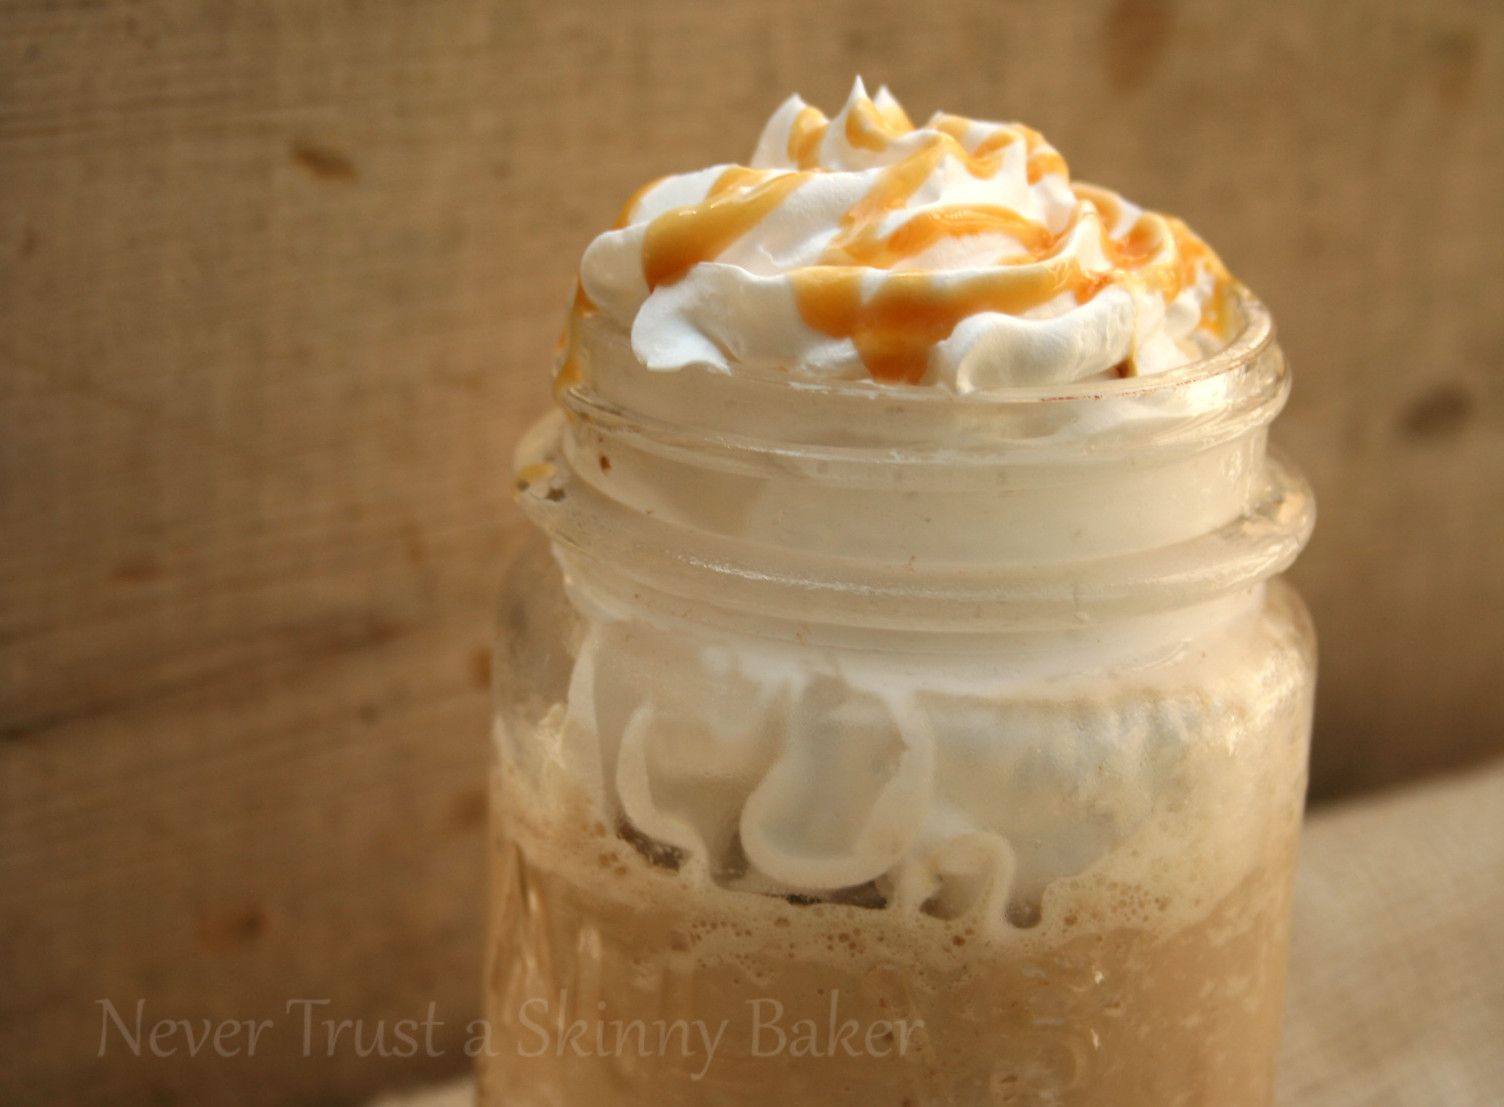 How do I order a skinny caramel latte from Starbucks? - Foodly